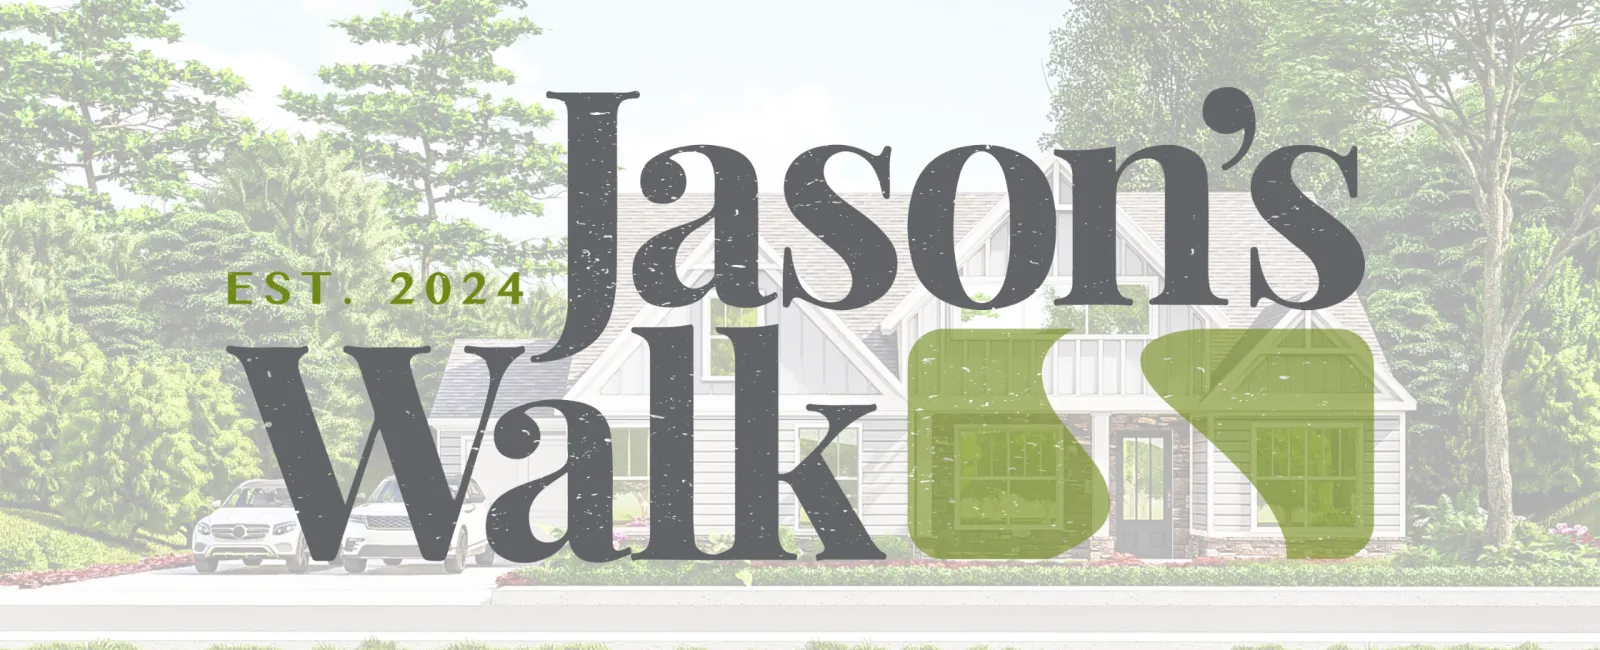 Jason's Walk community in Cumming